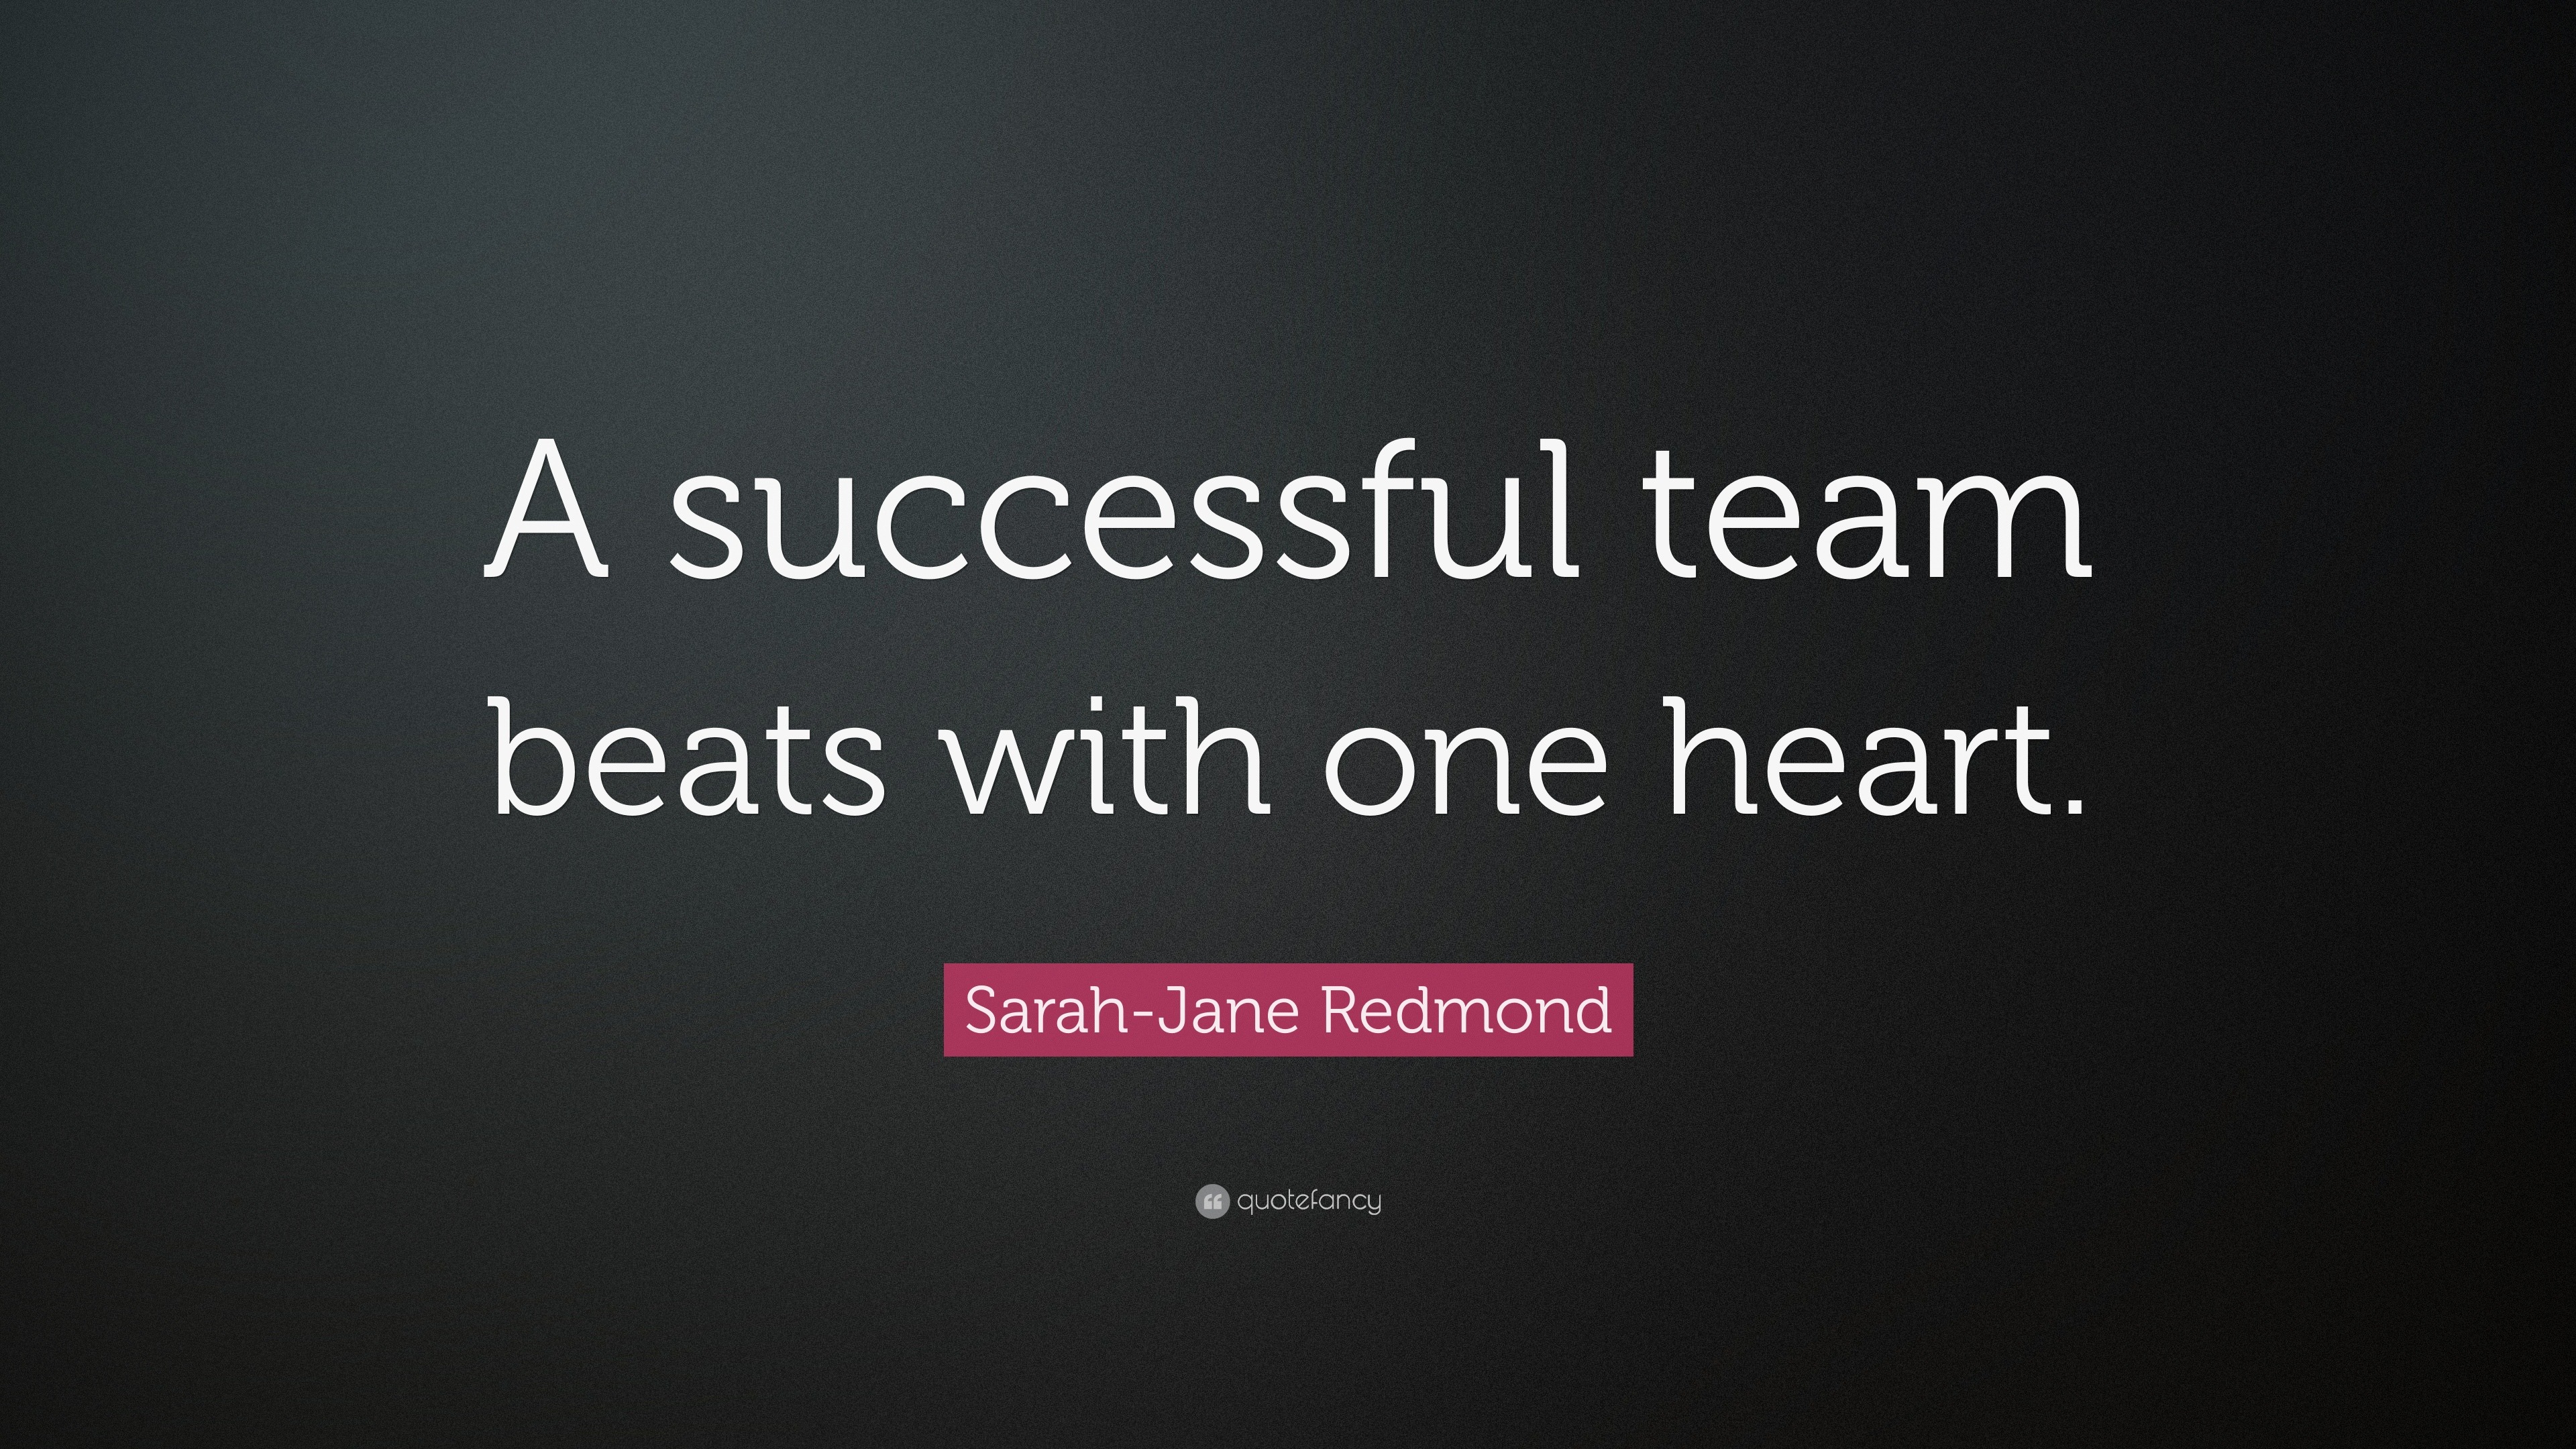 Byg op hjemmehørende mund Sarah-Jane Redmond Quote: “A successful team beats with one heart.”